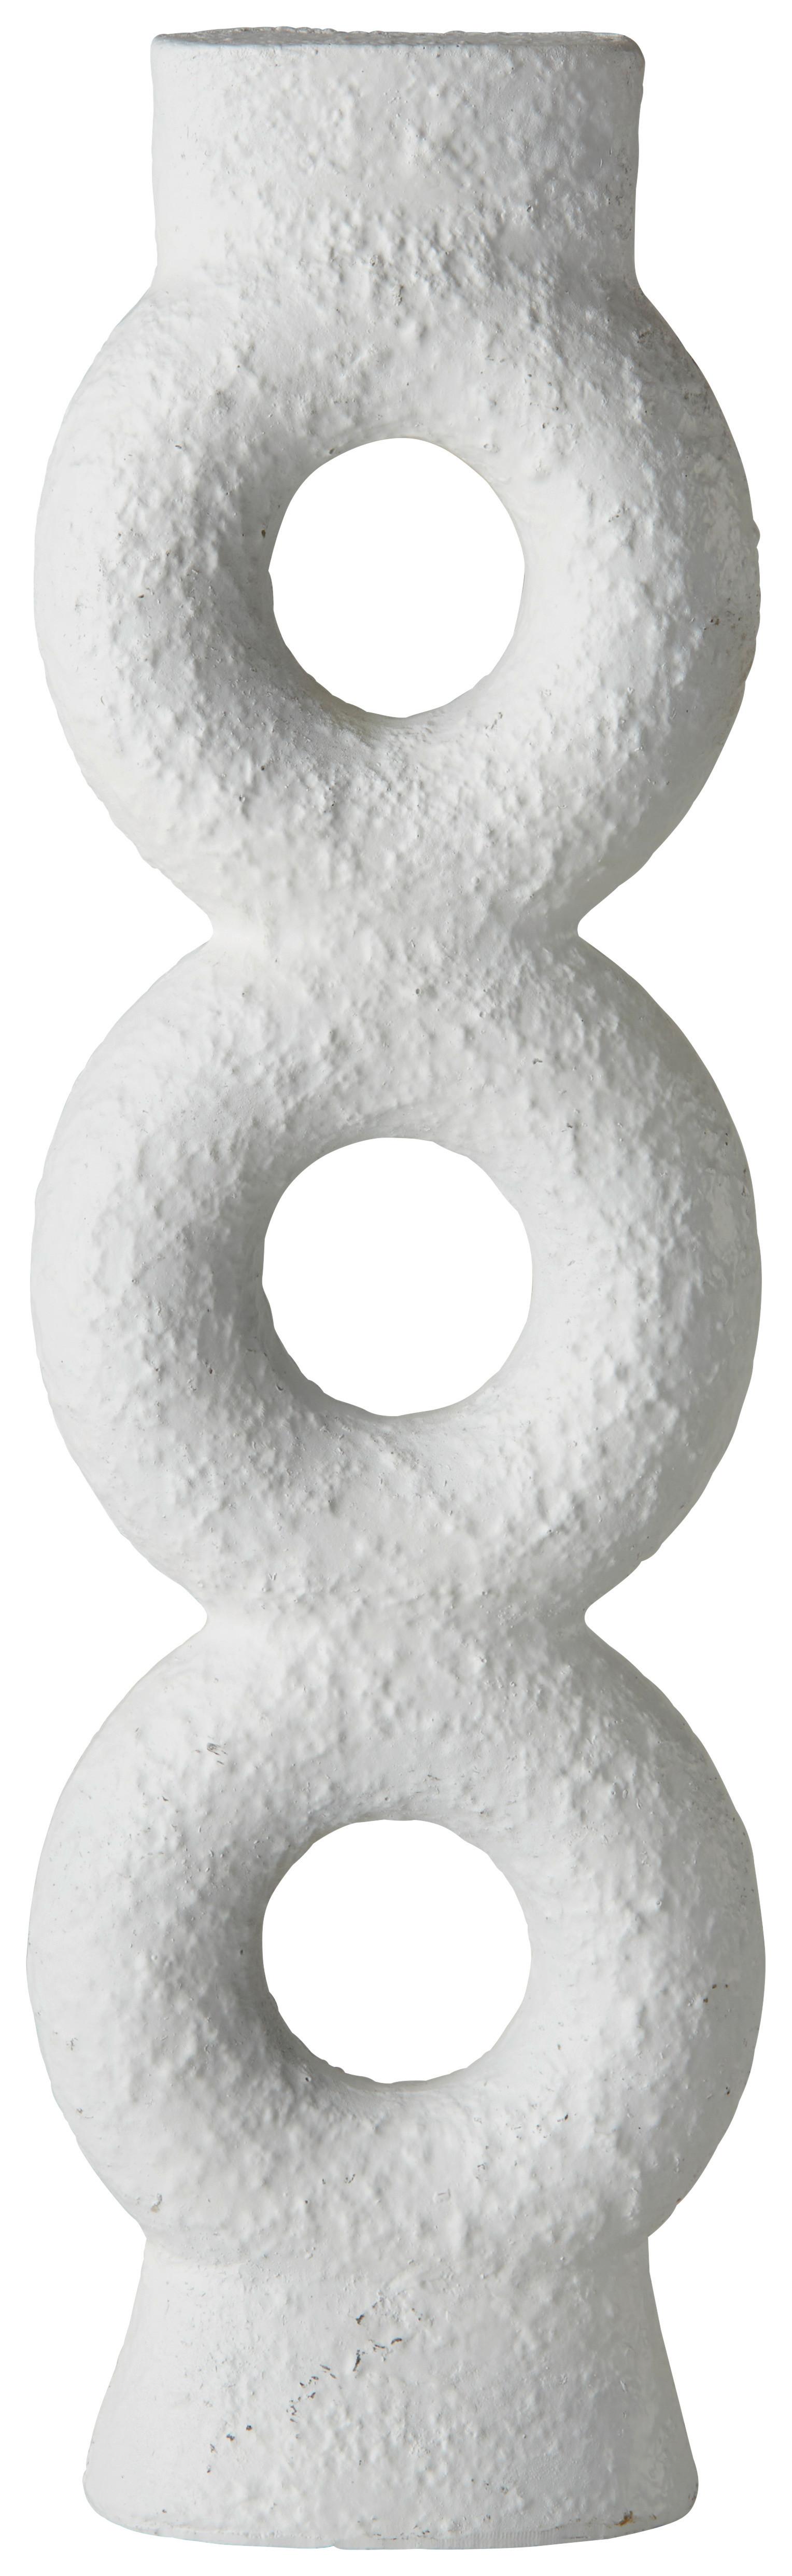 Skulptur Binge in Weiß - Weiß, Kunststoff (10/35/3cm) - Modern Living